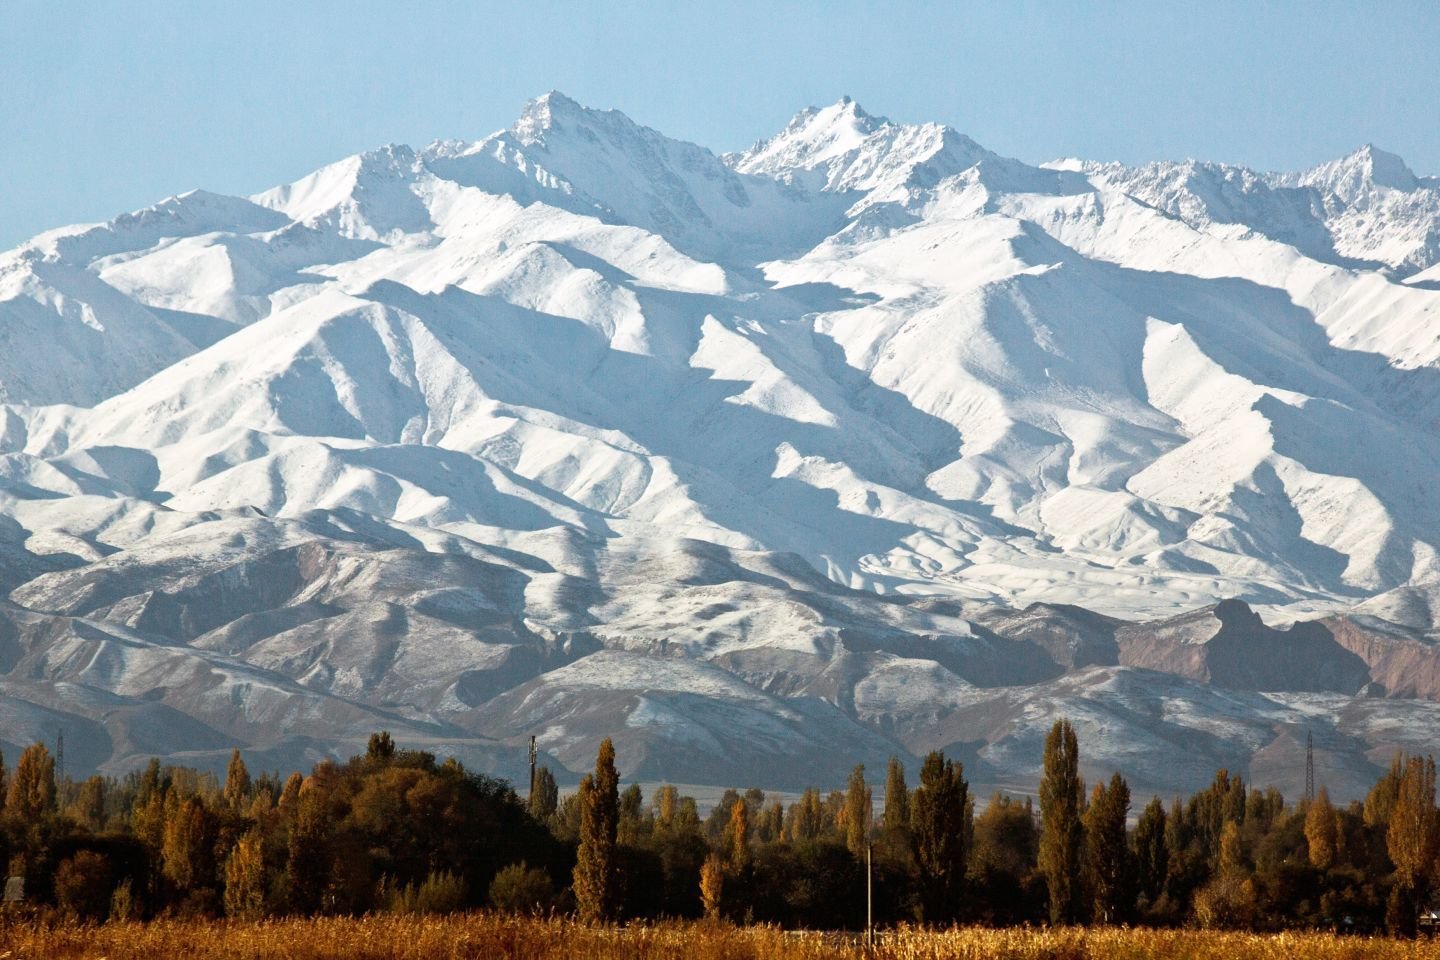 Киргизский хребет Тянь-Шань